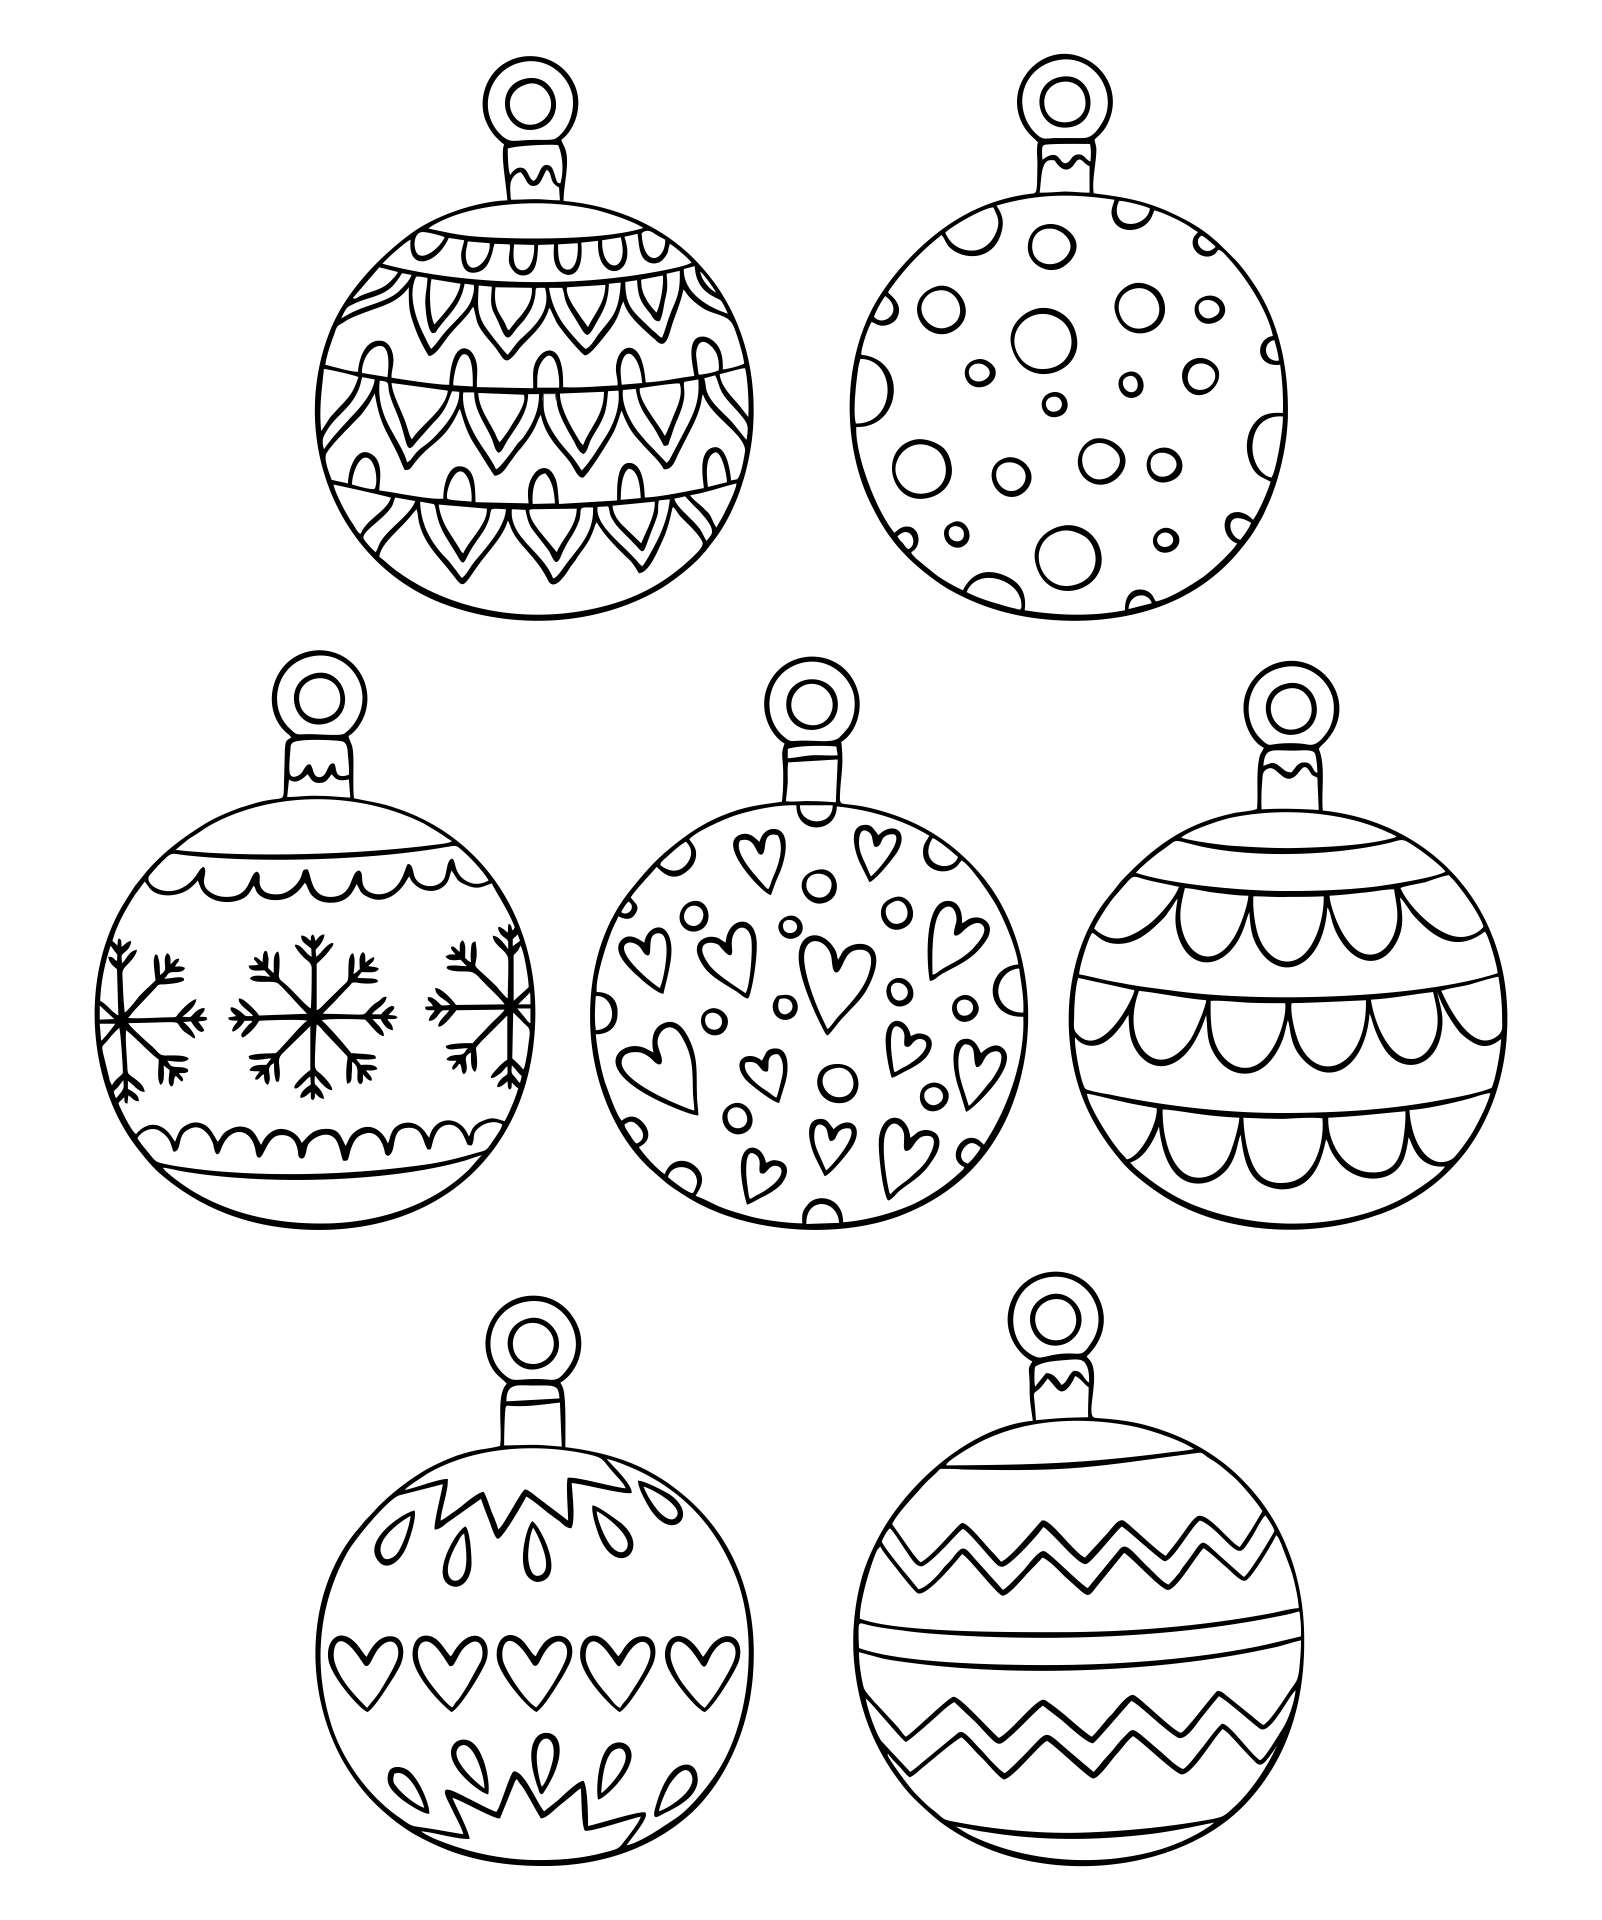 6 Best Images of Preschool Printable Christmas Ornaments - Free ...